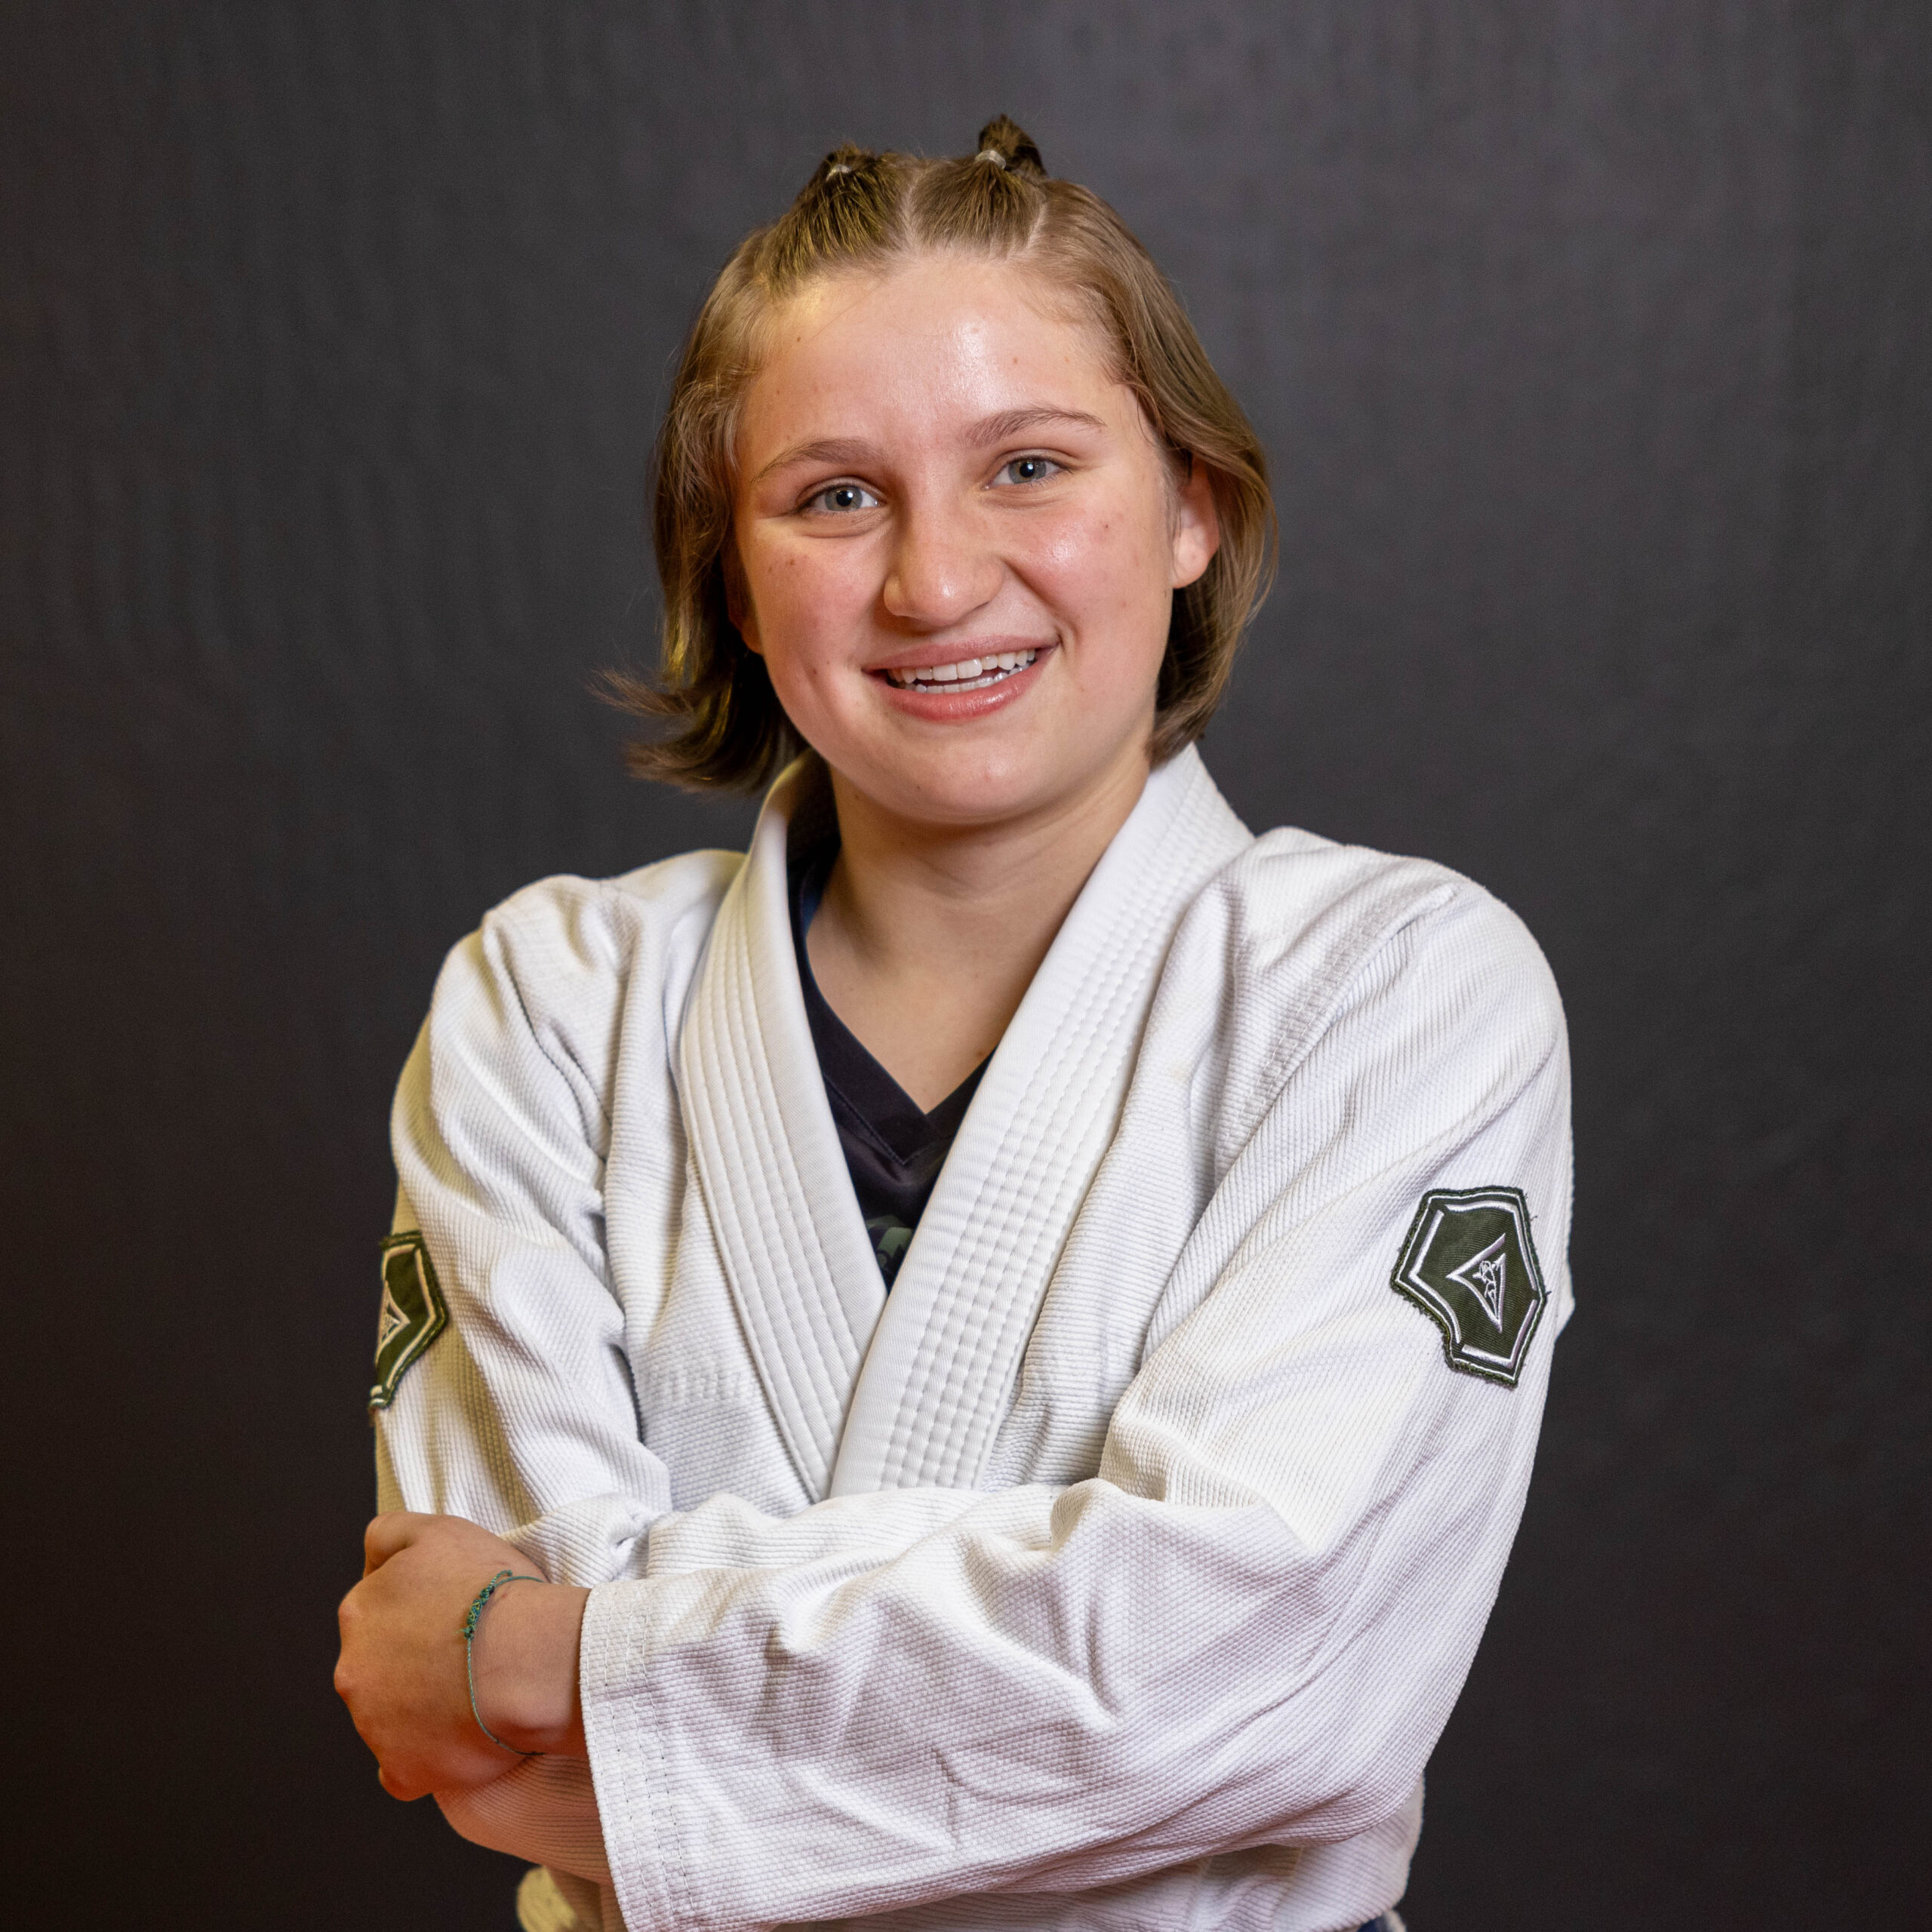 Gracie Jiu-Jitsu Instructor Emmerson